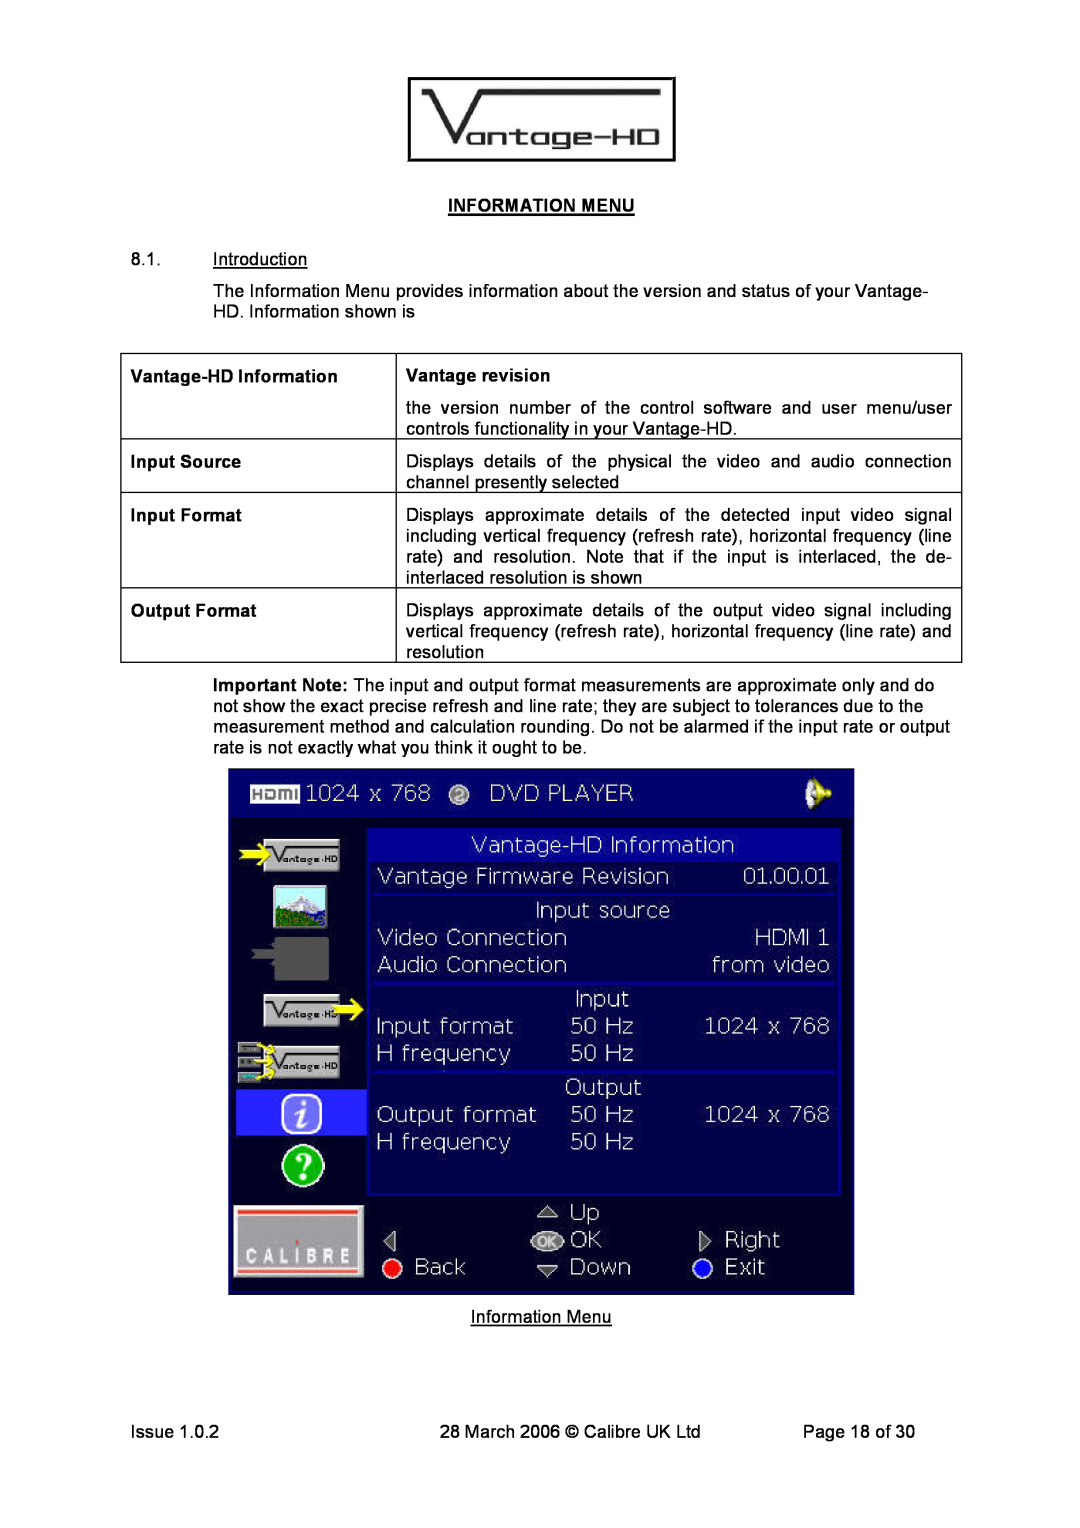 Calibre UK VANTAGE-HD Information Menu, Vantage-HDInformation, Vantage revision, Input Source, Input Format, Output Format 